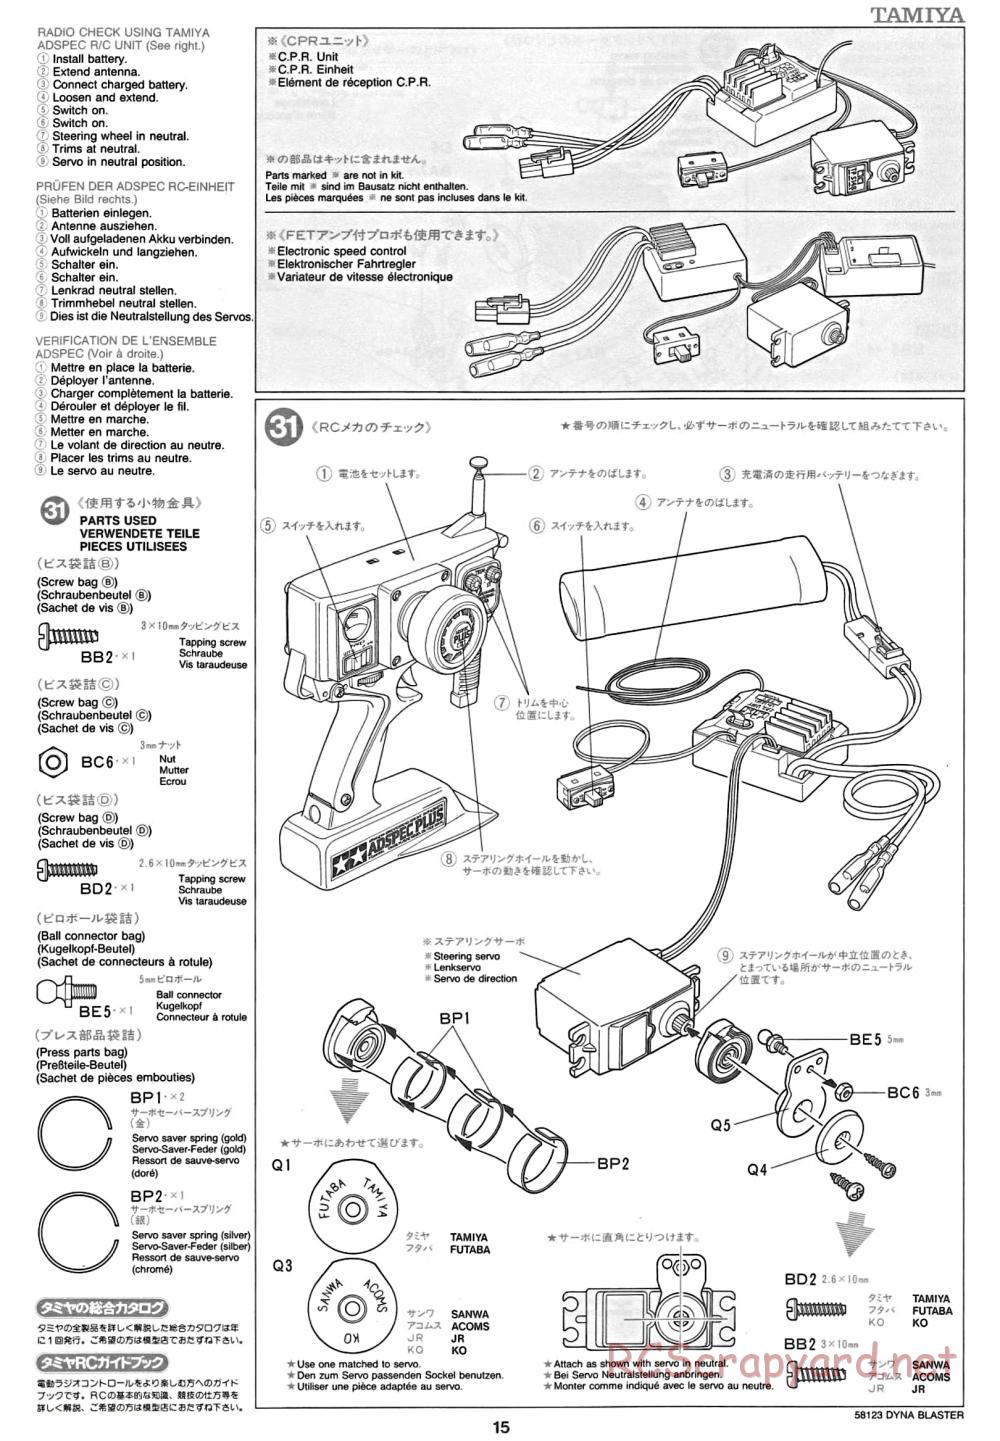 Tamiya - Dyna Blaster Chassis - Manual - Page 15